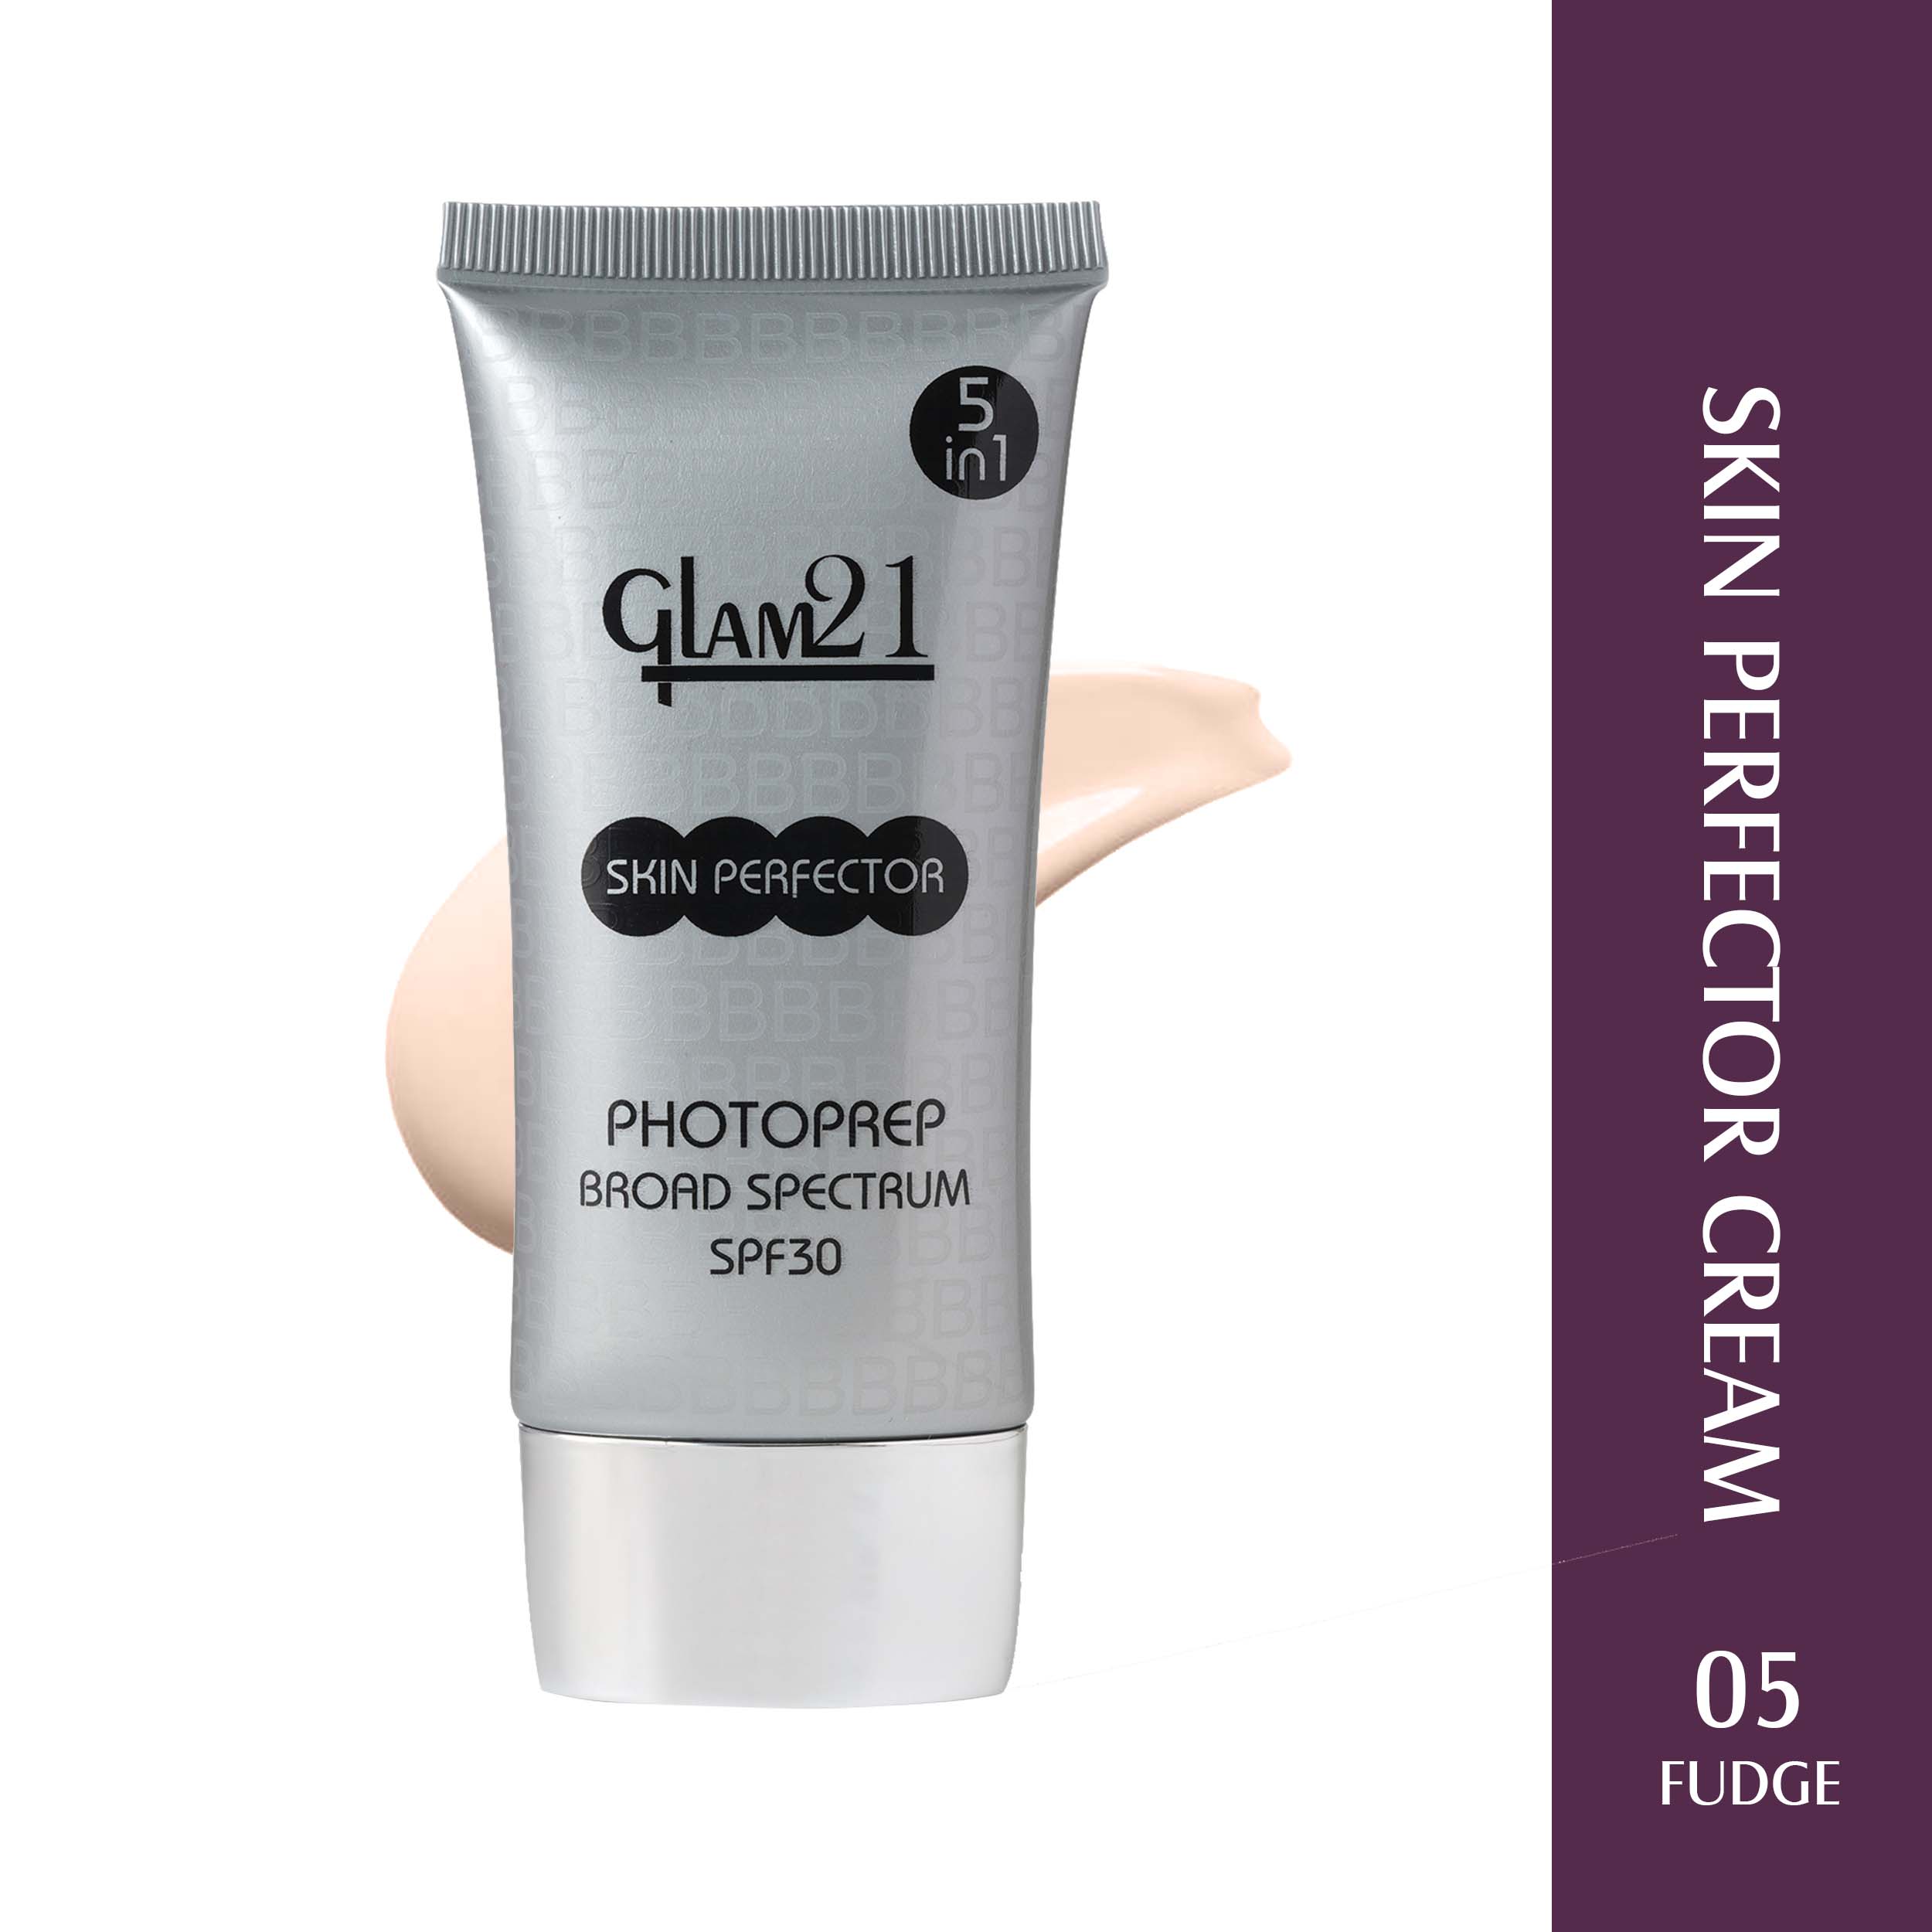 Glam21 Skin Perfector Cream with SPF30 UV Protection with Lightweight Satin Formulation Foundation, 50g (FUDGE-05)